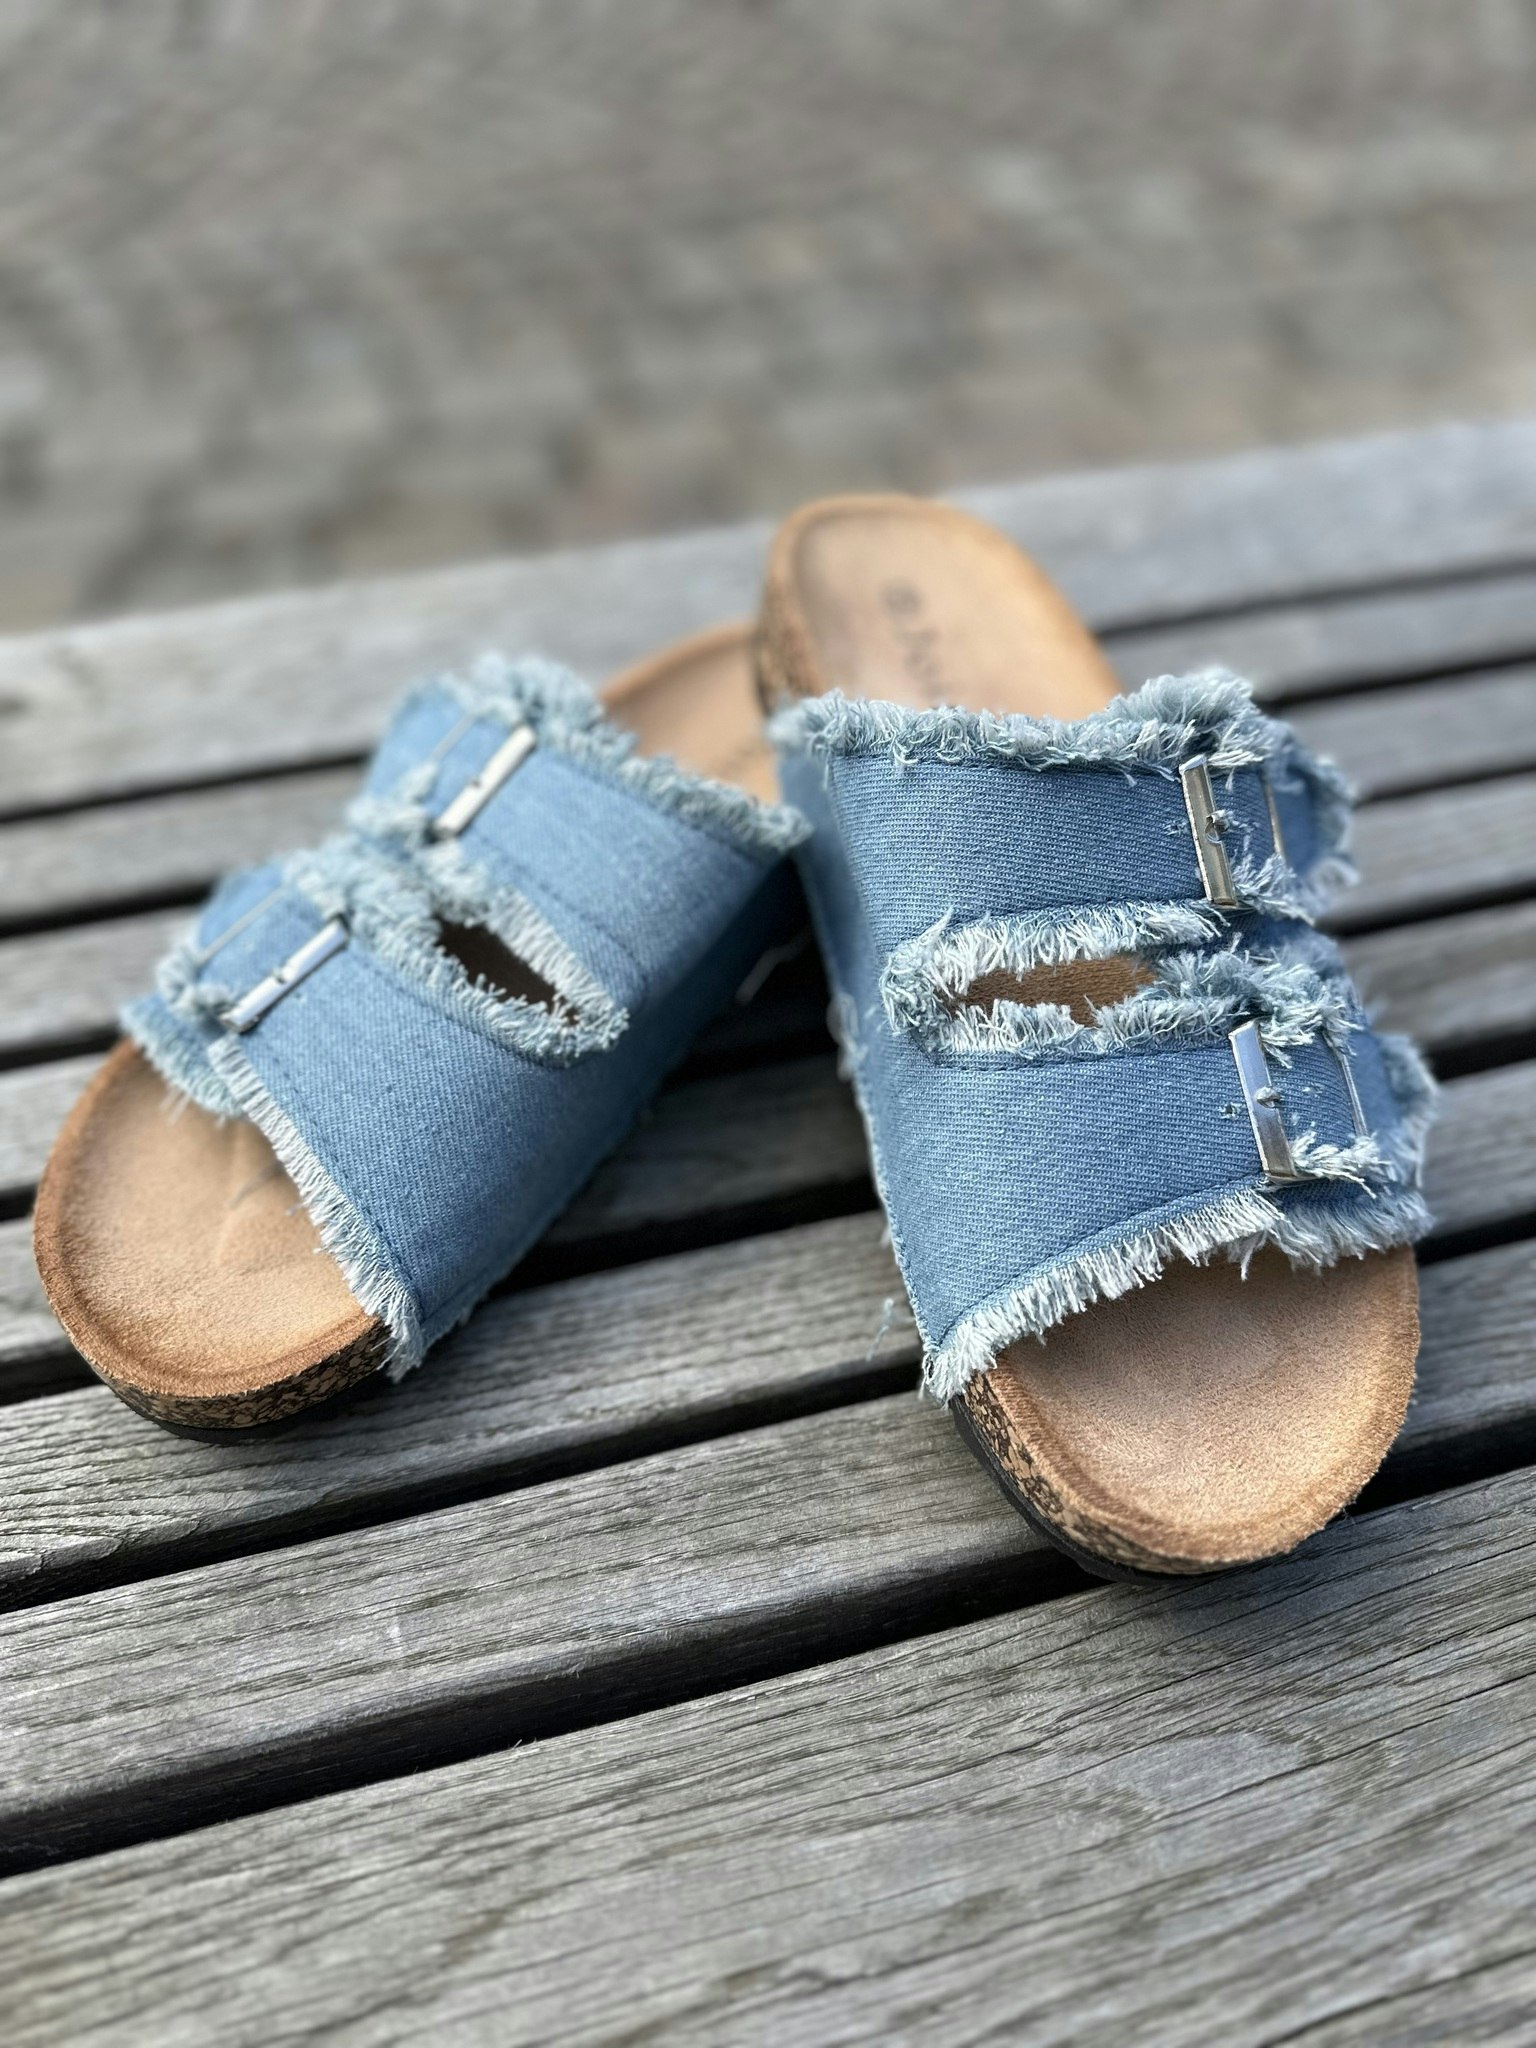 Jeans sandal frans